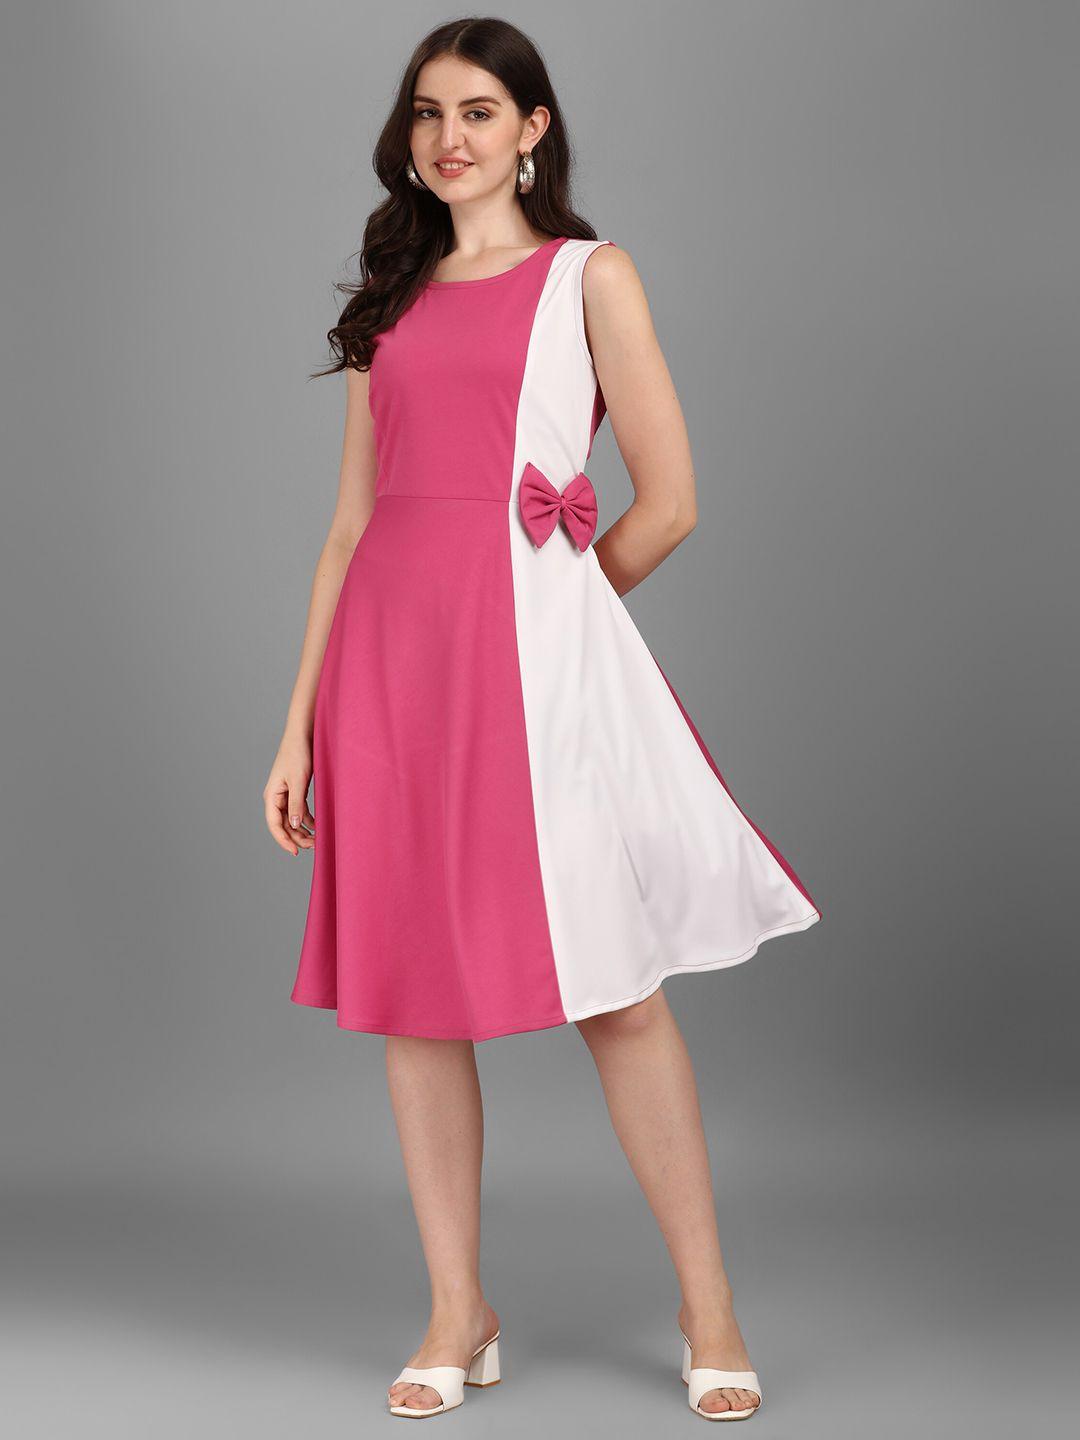 kinjo pink & white colourblocked formal dress